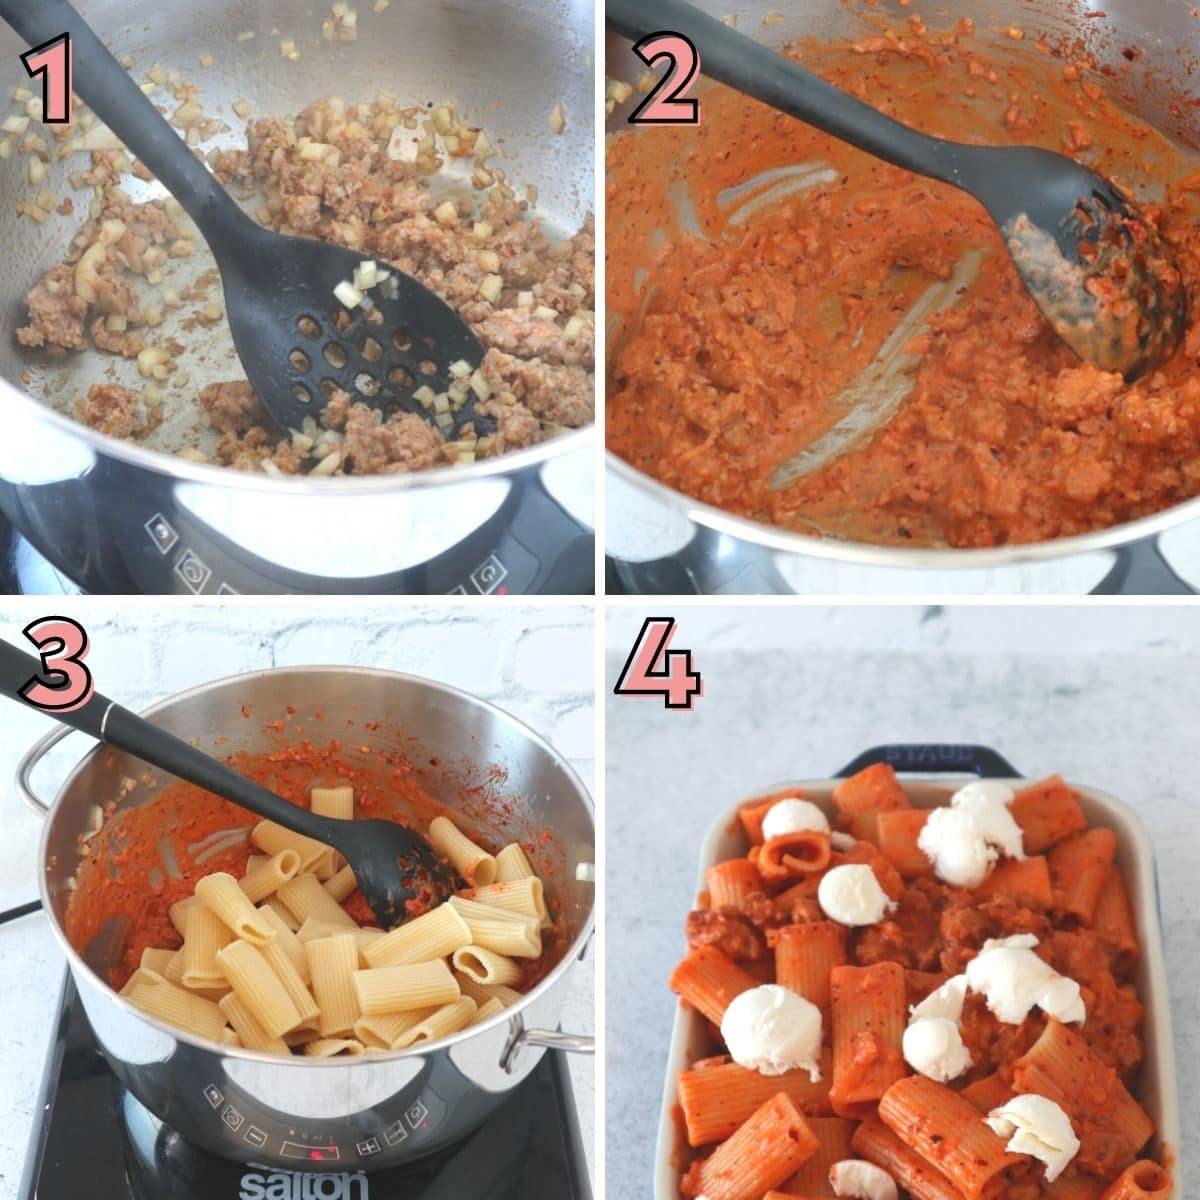 Step by step instructions to prepare rigatoni al forno